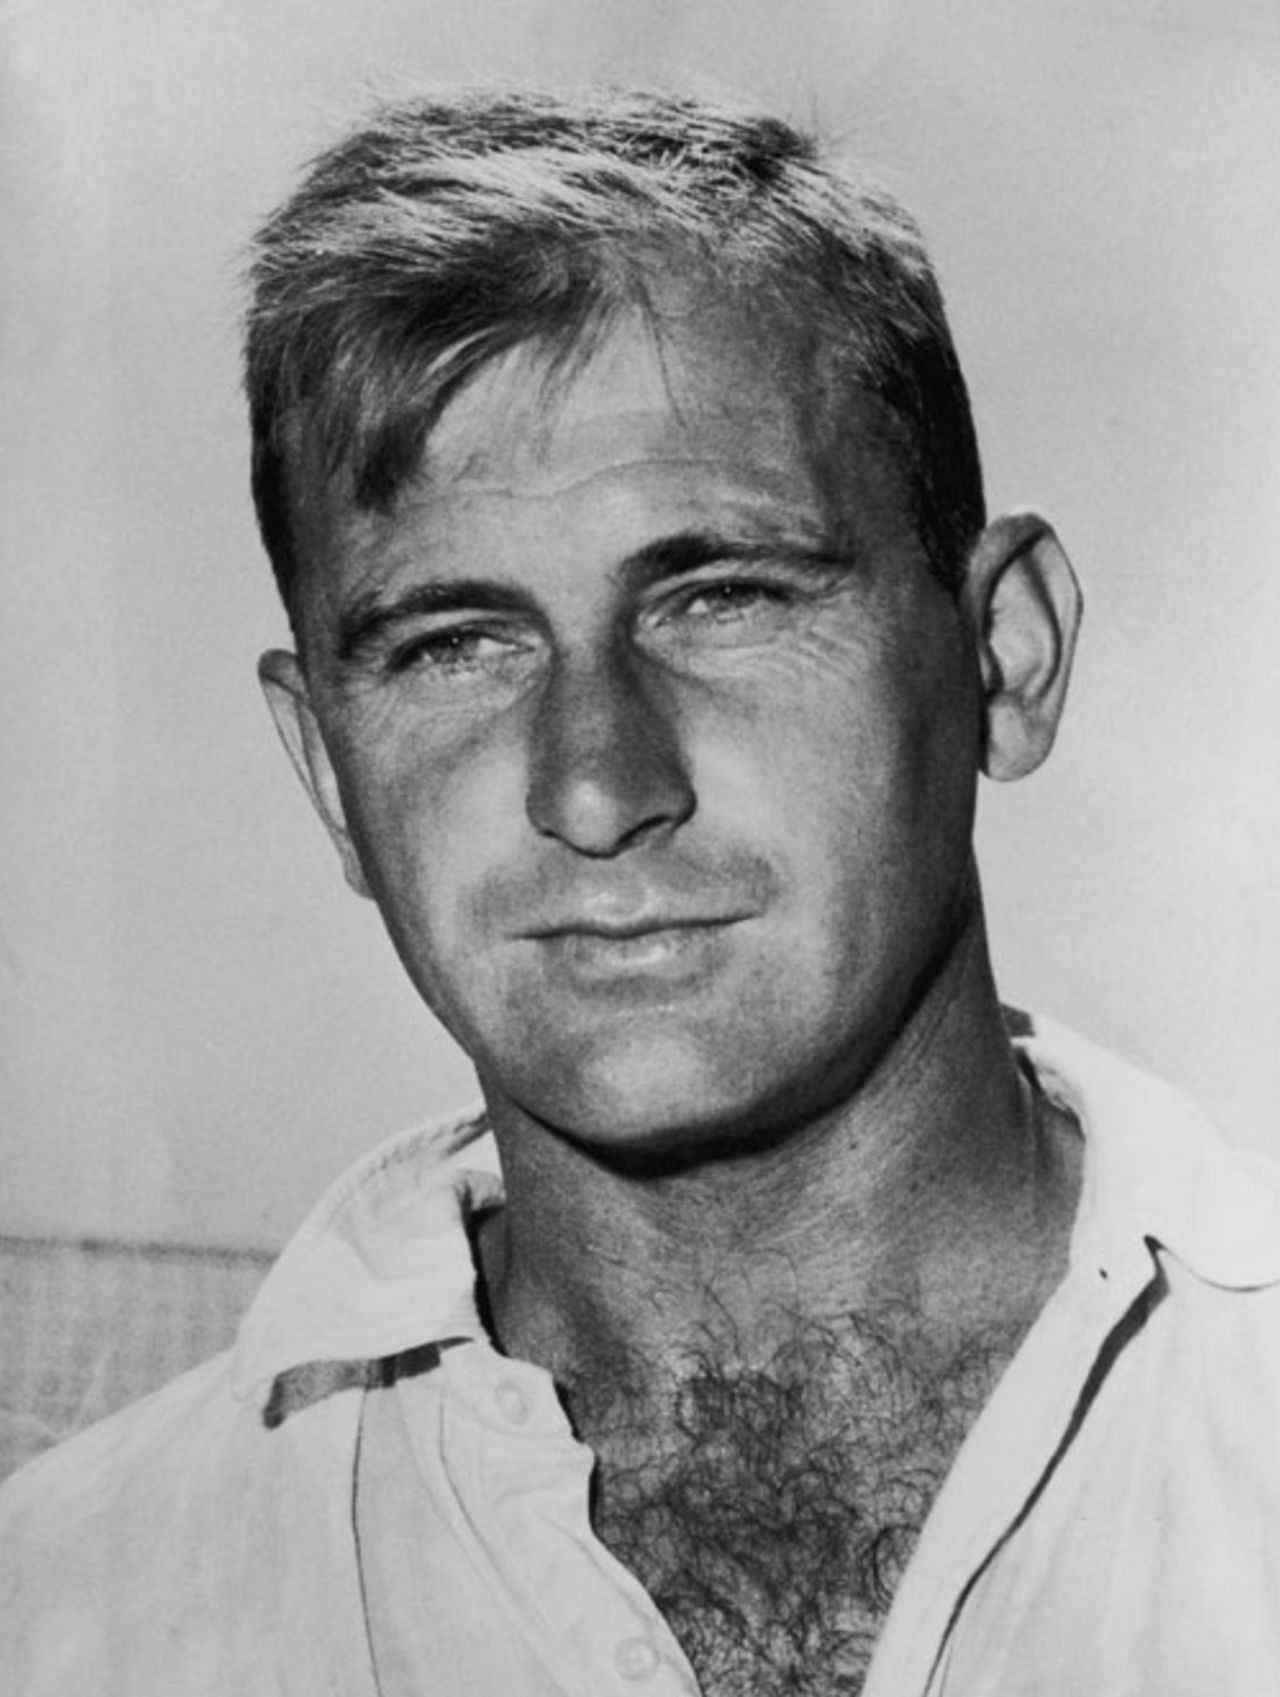 Peter Philpott, player portrait, November 1, 1965